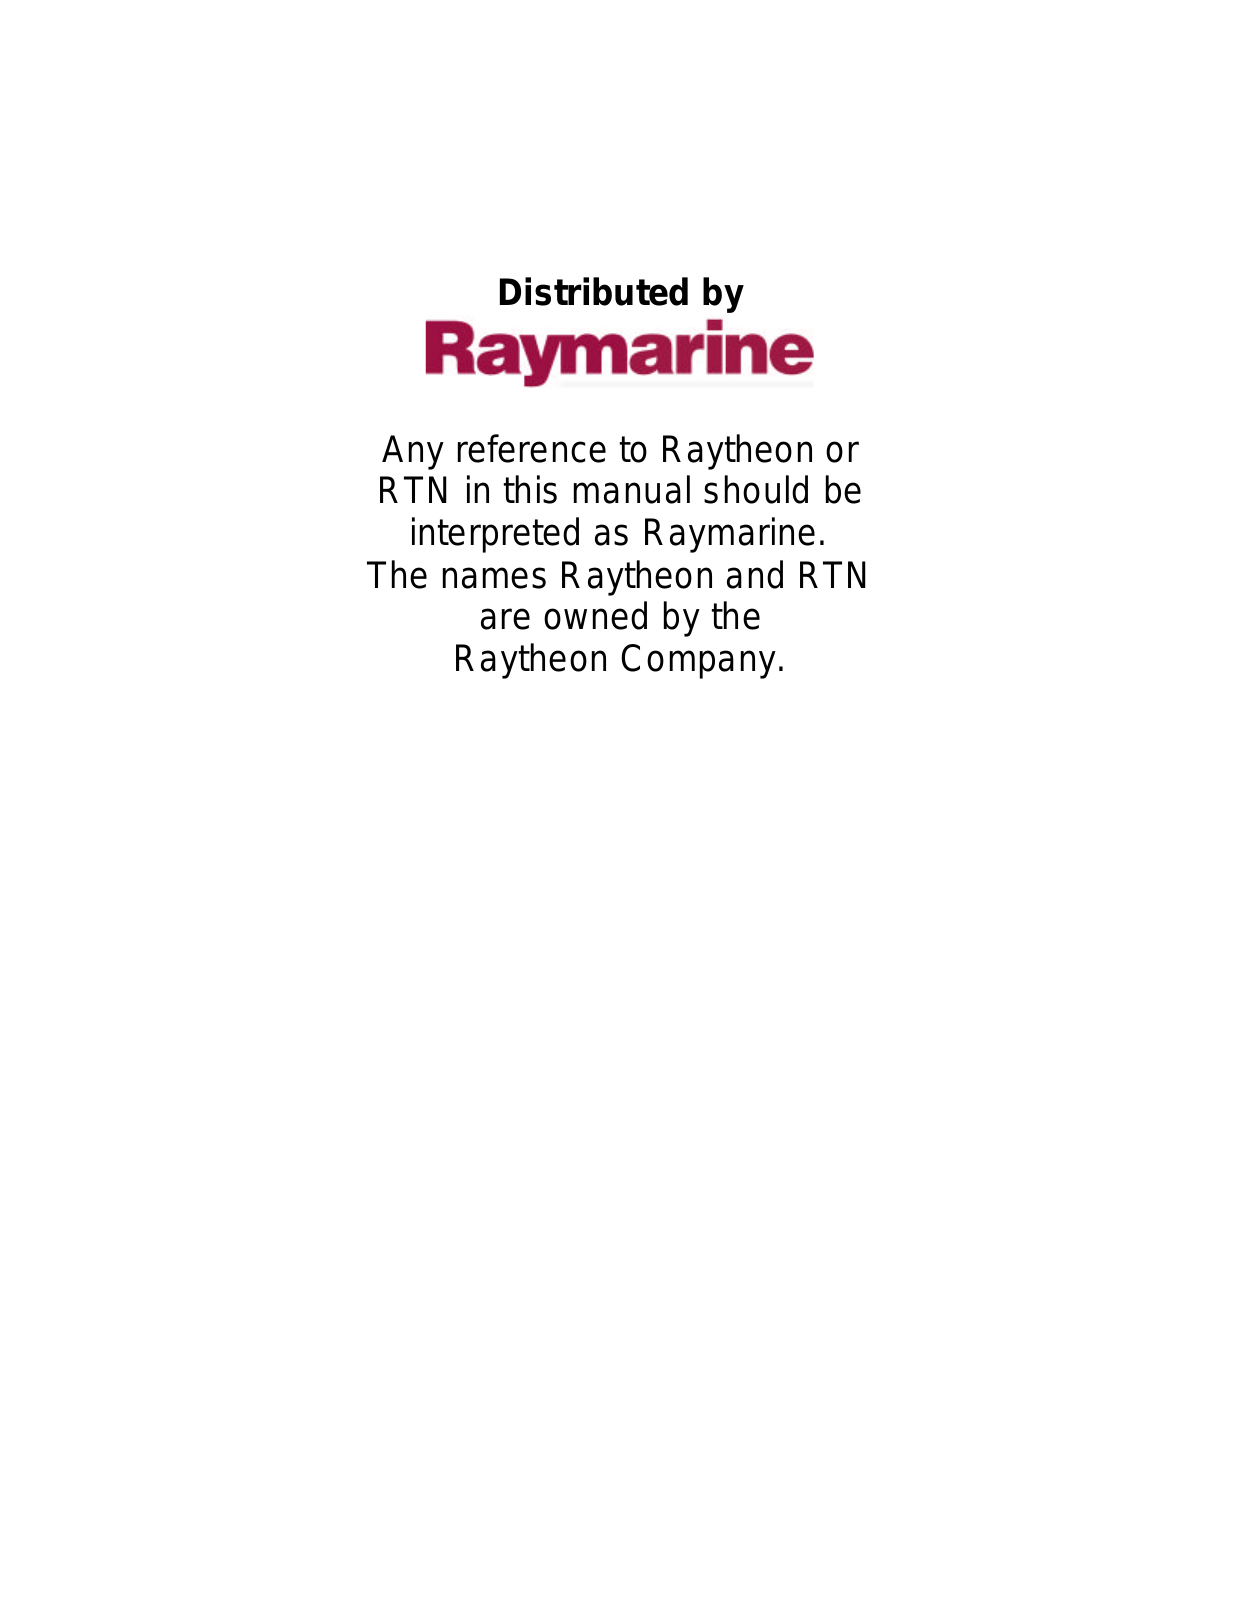 Raymarine APELCO 460 Manual